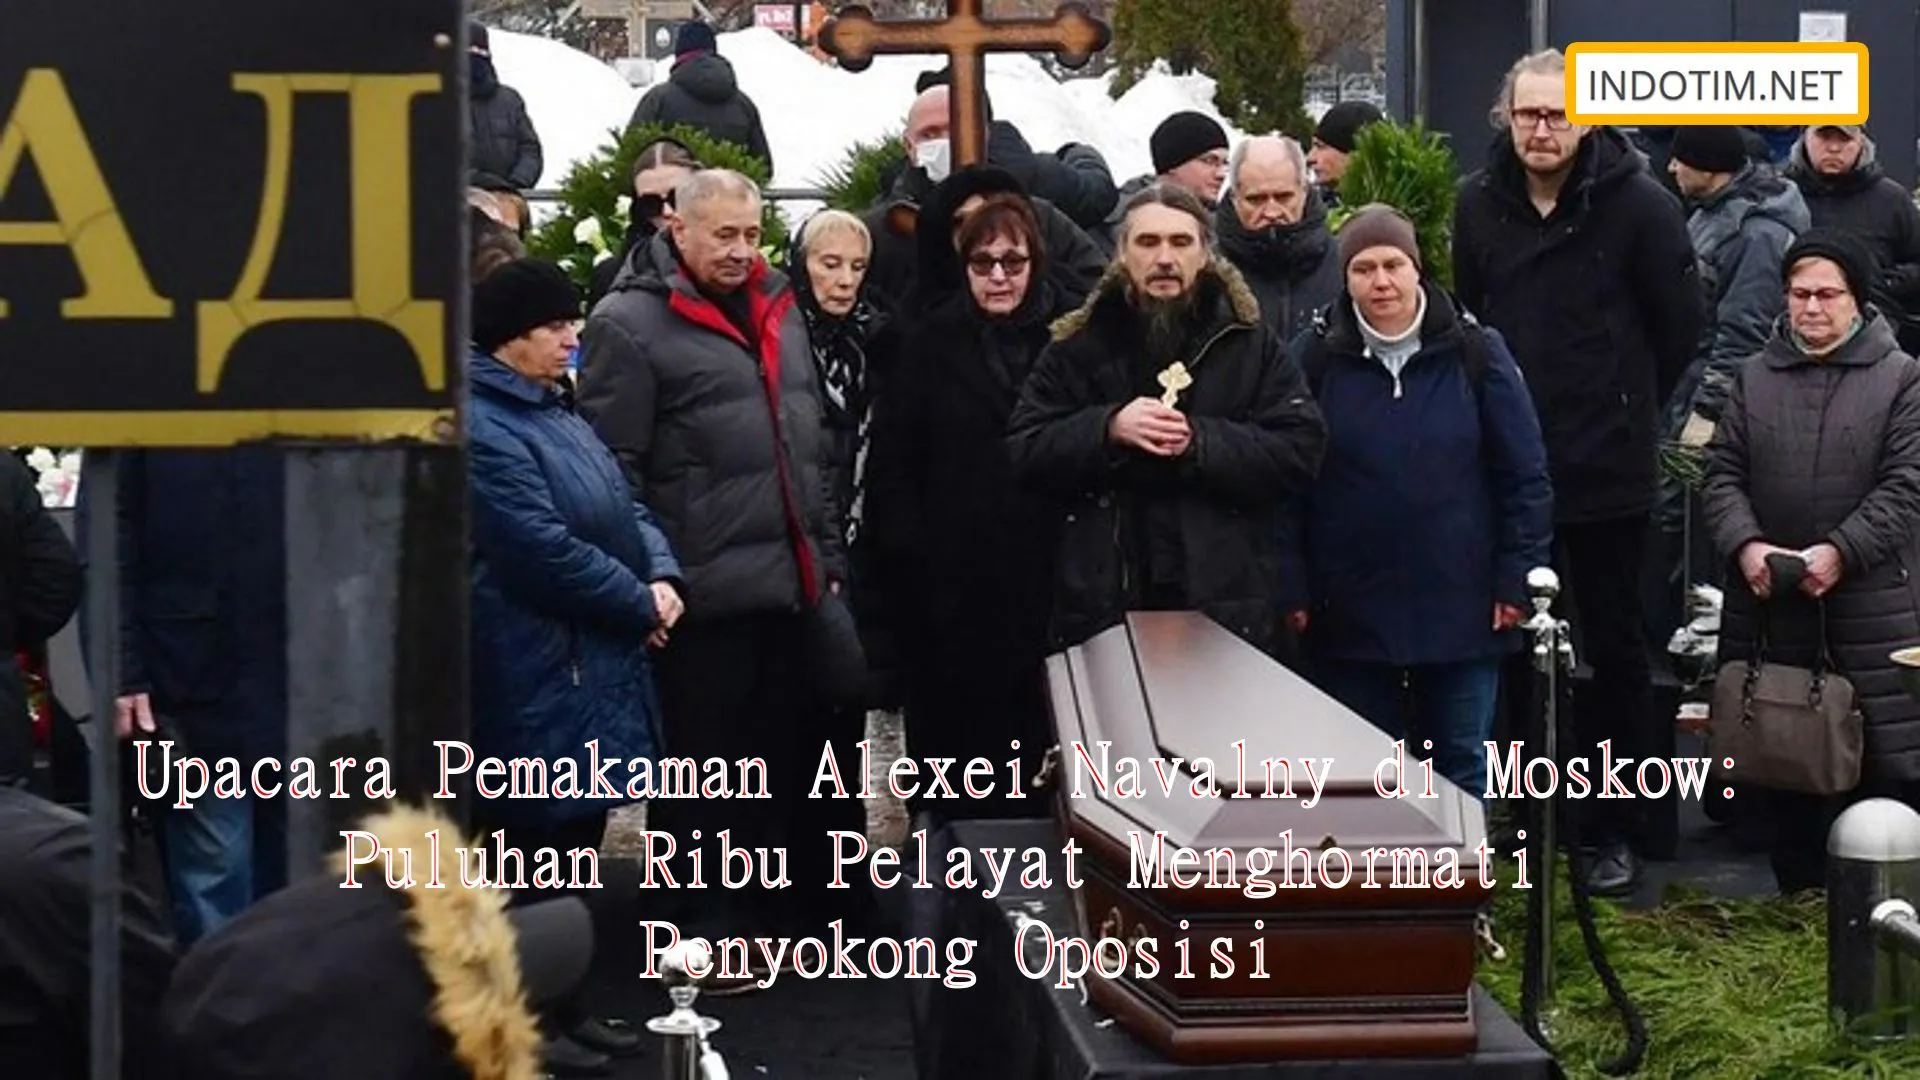 Upacara Pemakaman Alexei Navalny di Moskow: Puluhan Ribu Pelayat Menghormati Penyokong Oposisi